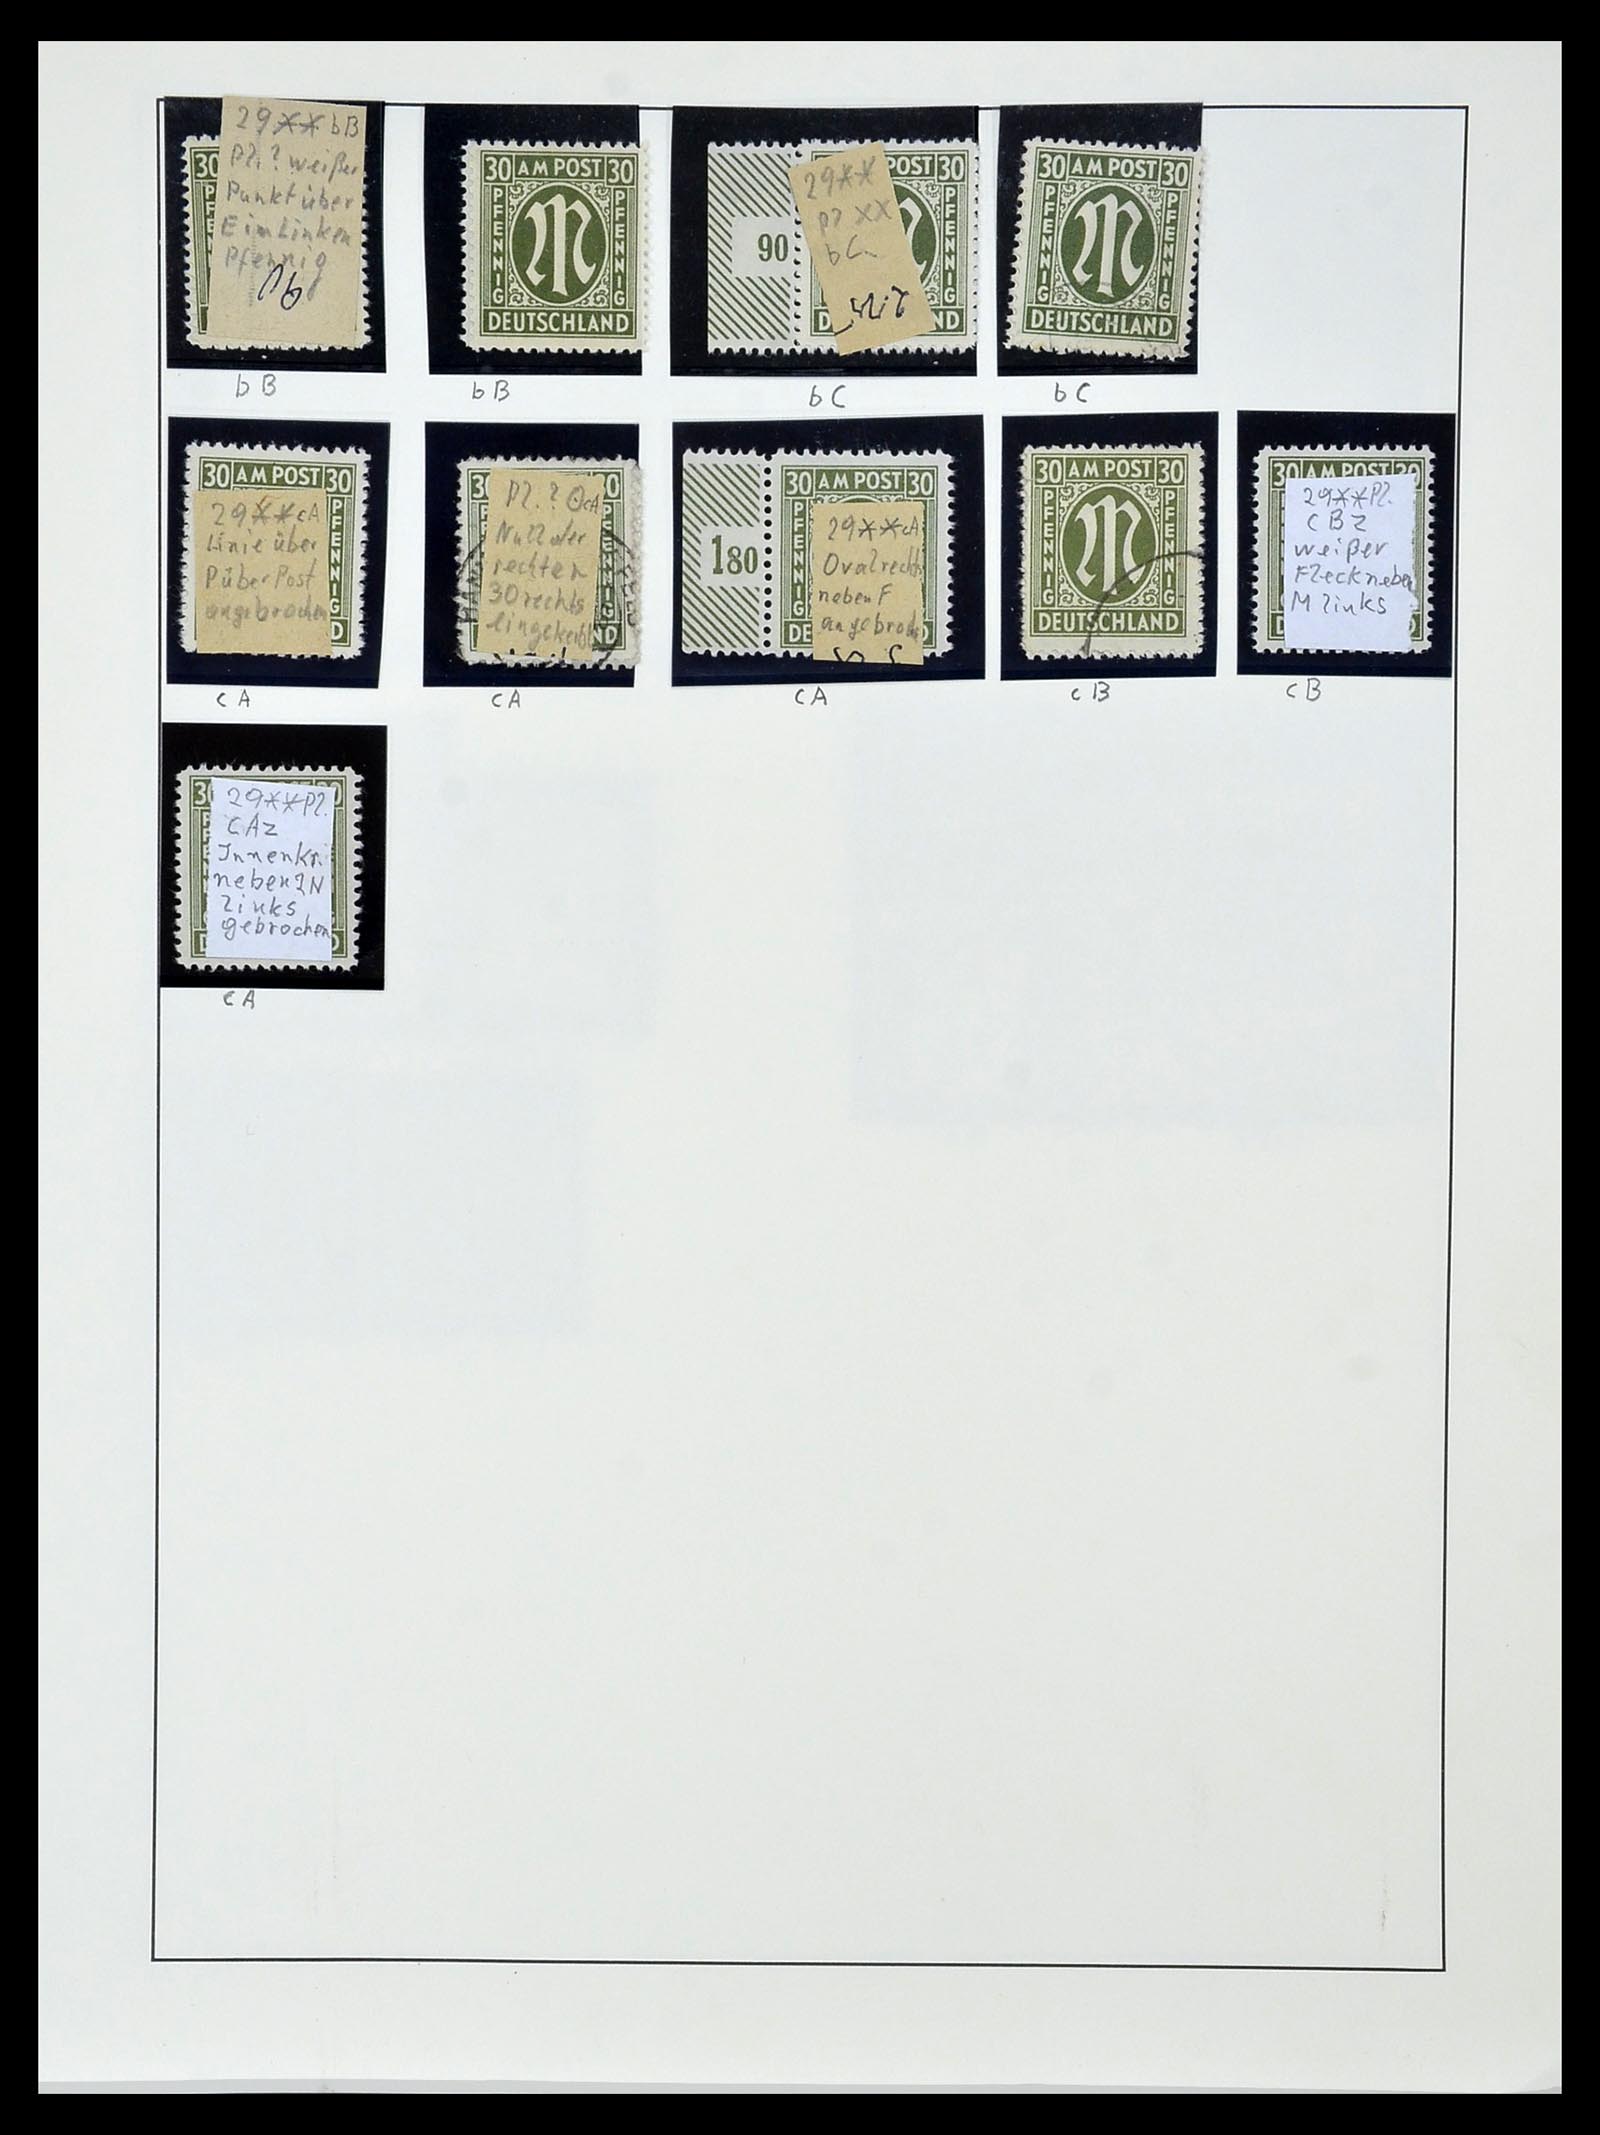 34152 066 - Stamp collection 34152 German Zones 1945-1949.